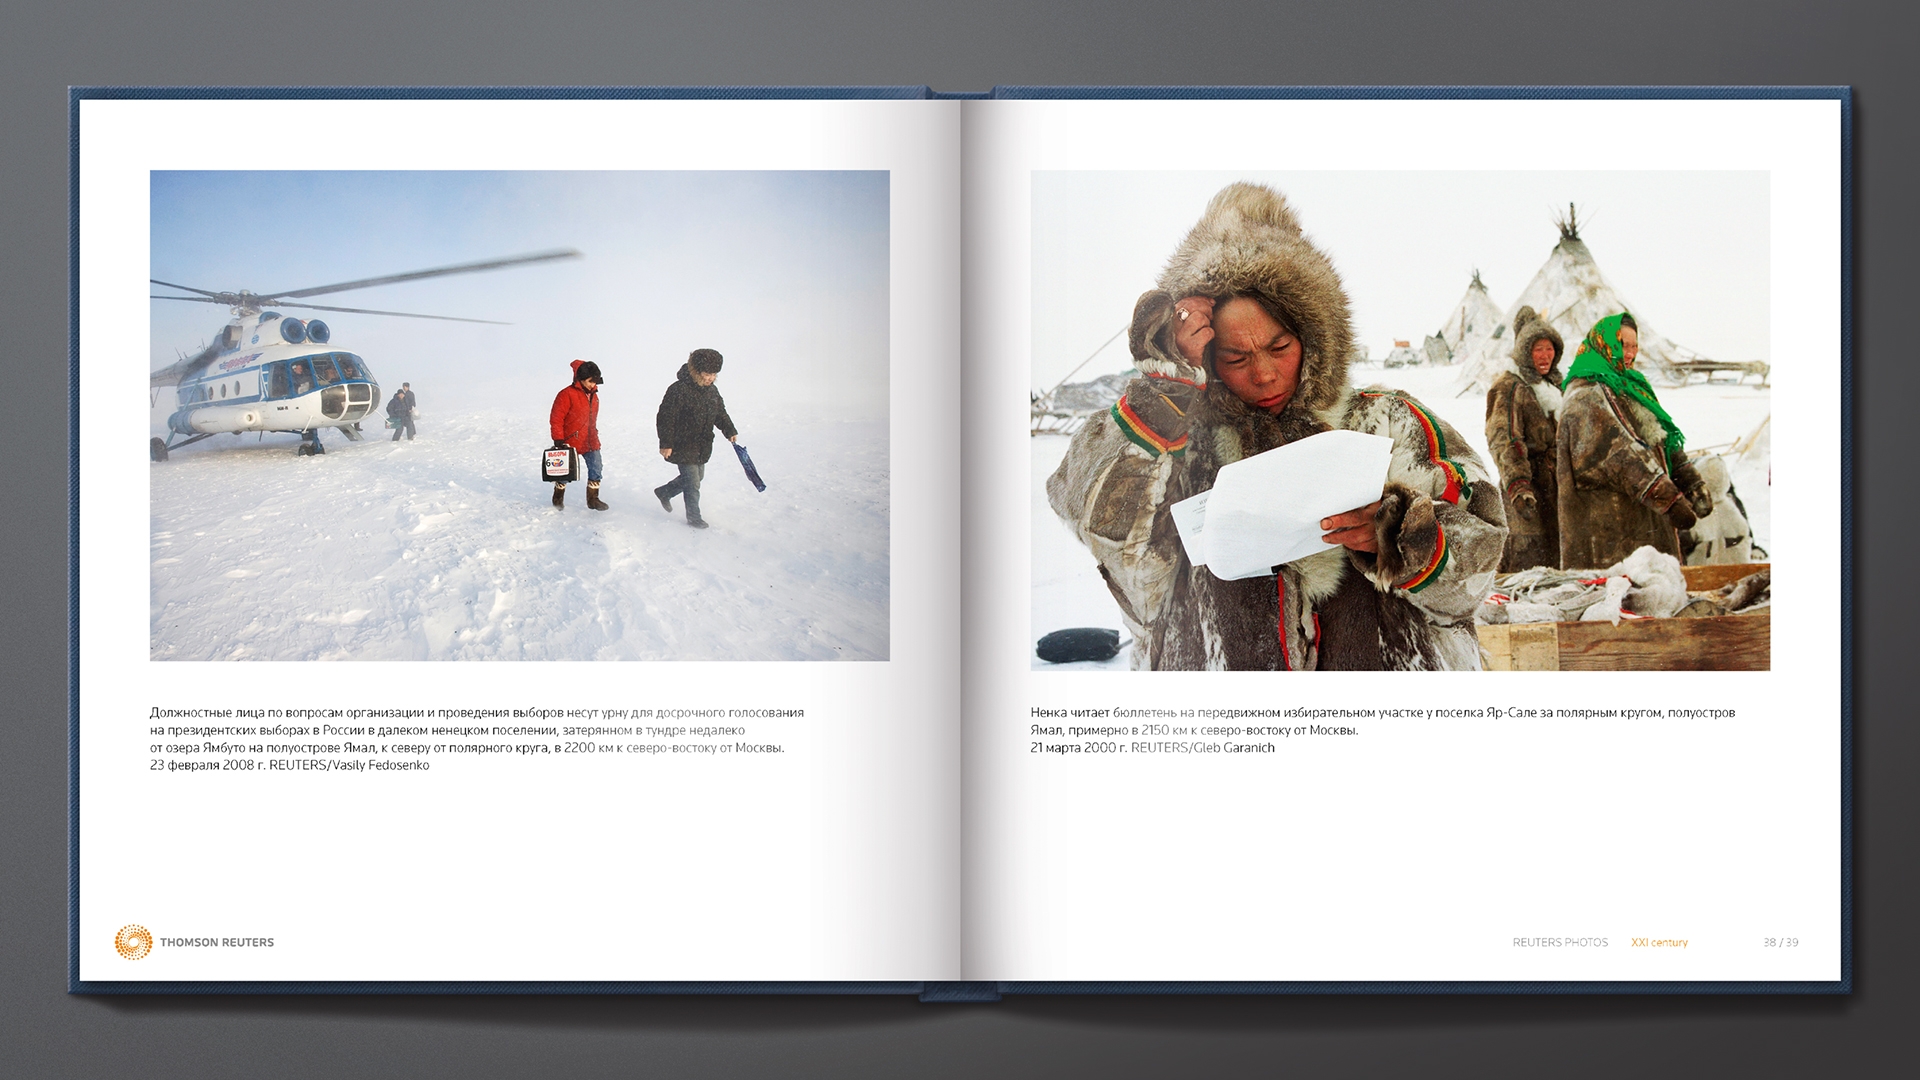 Thomson Reuters - Книга лучших фотографий 21 века